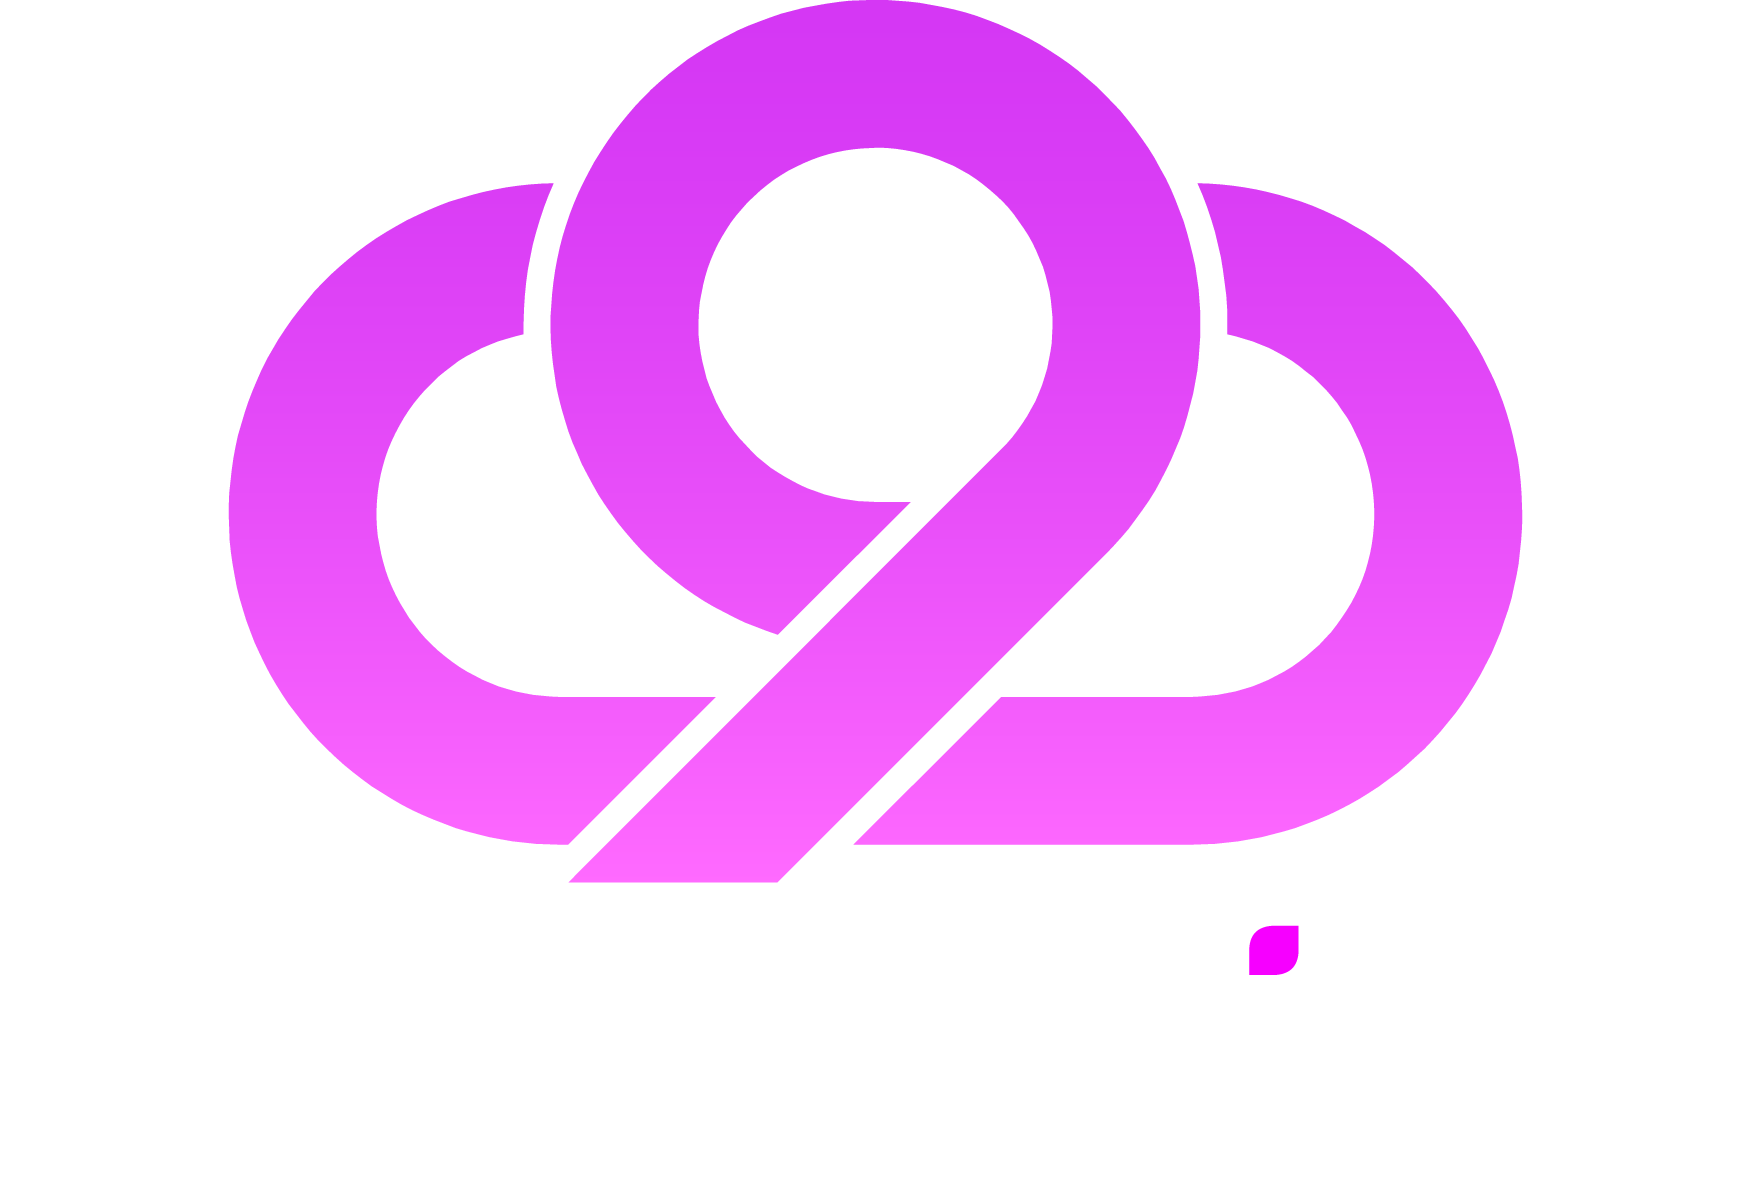 Cloudnine logo